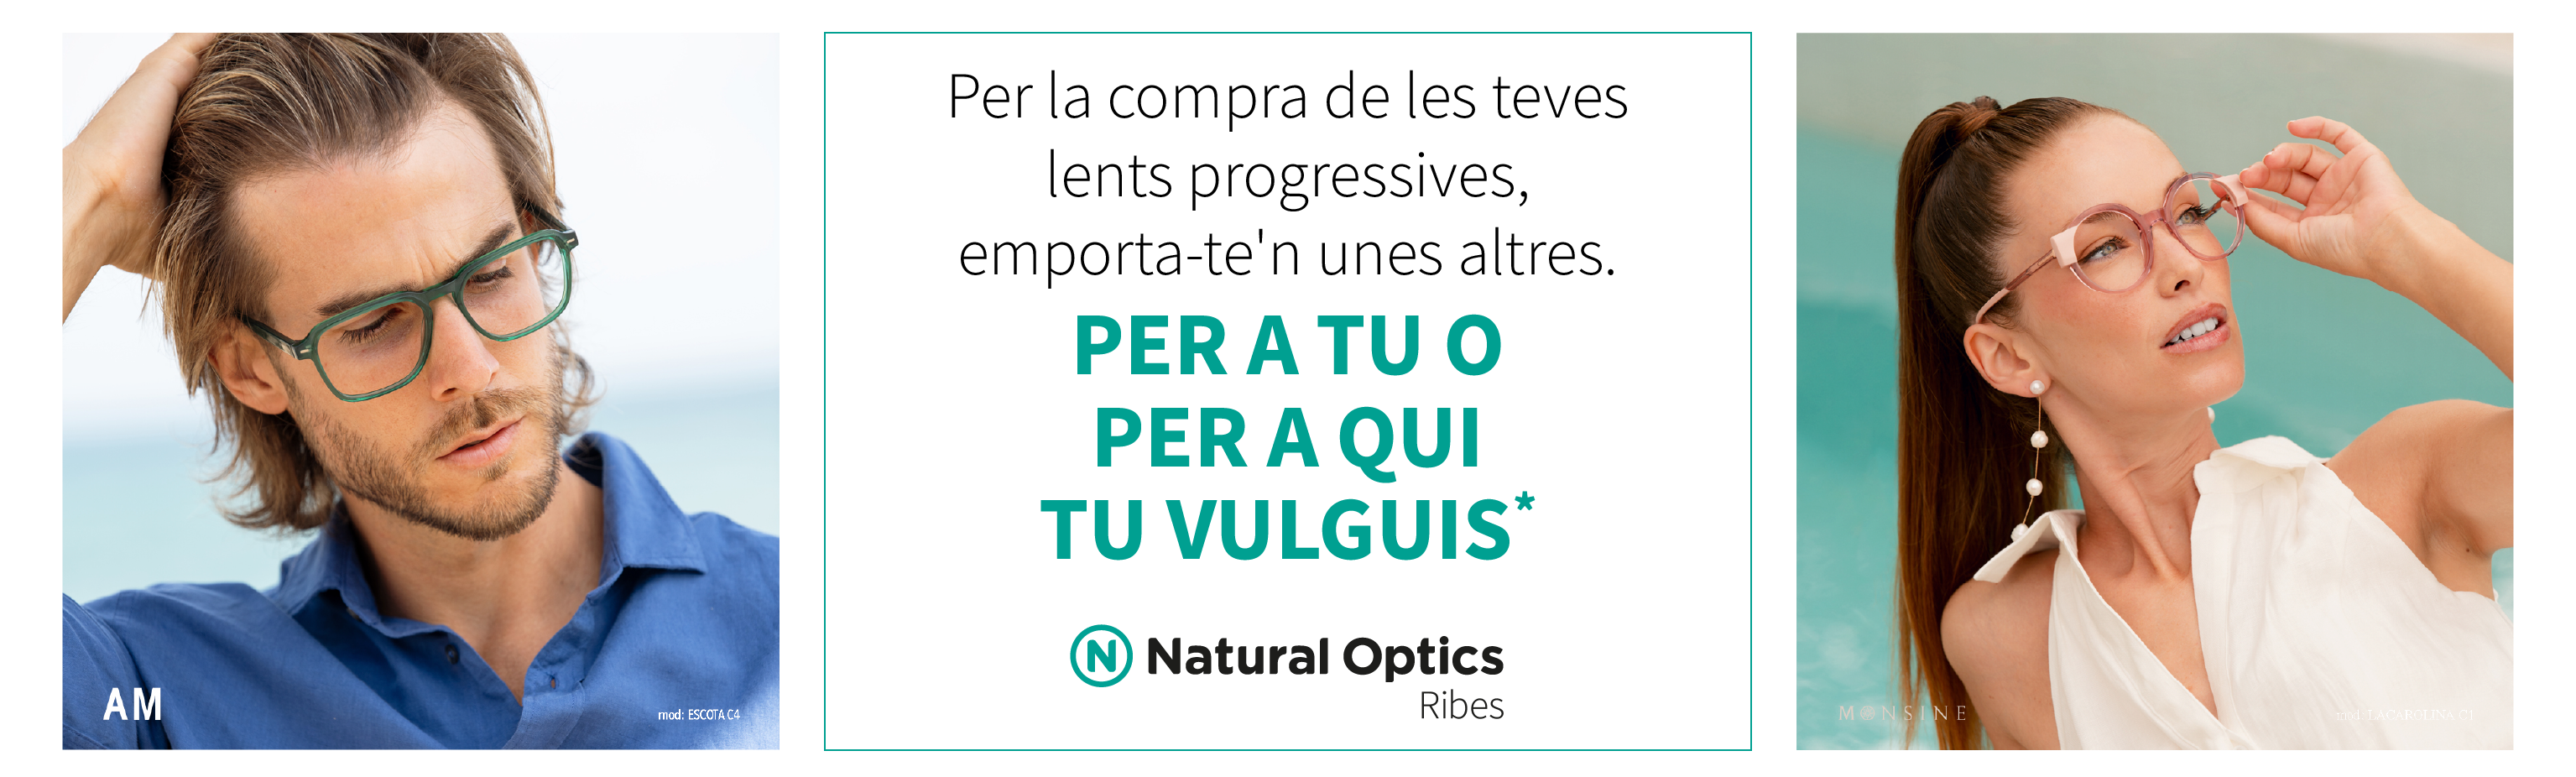 Natural Optics Ribes